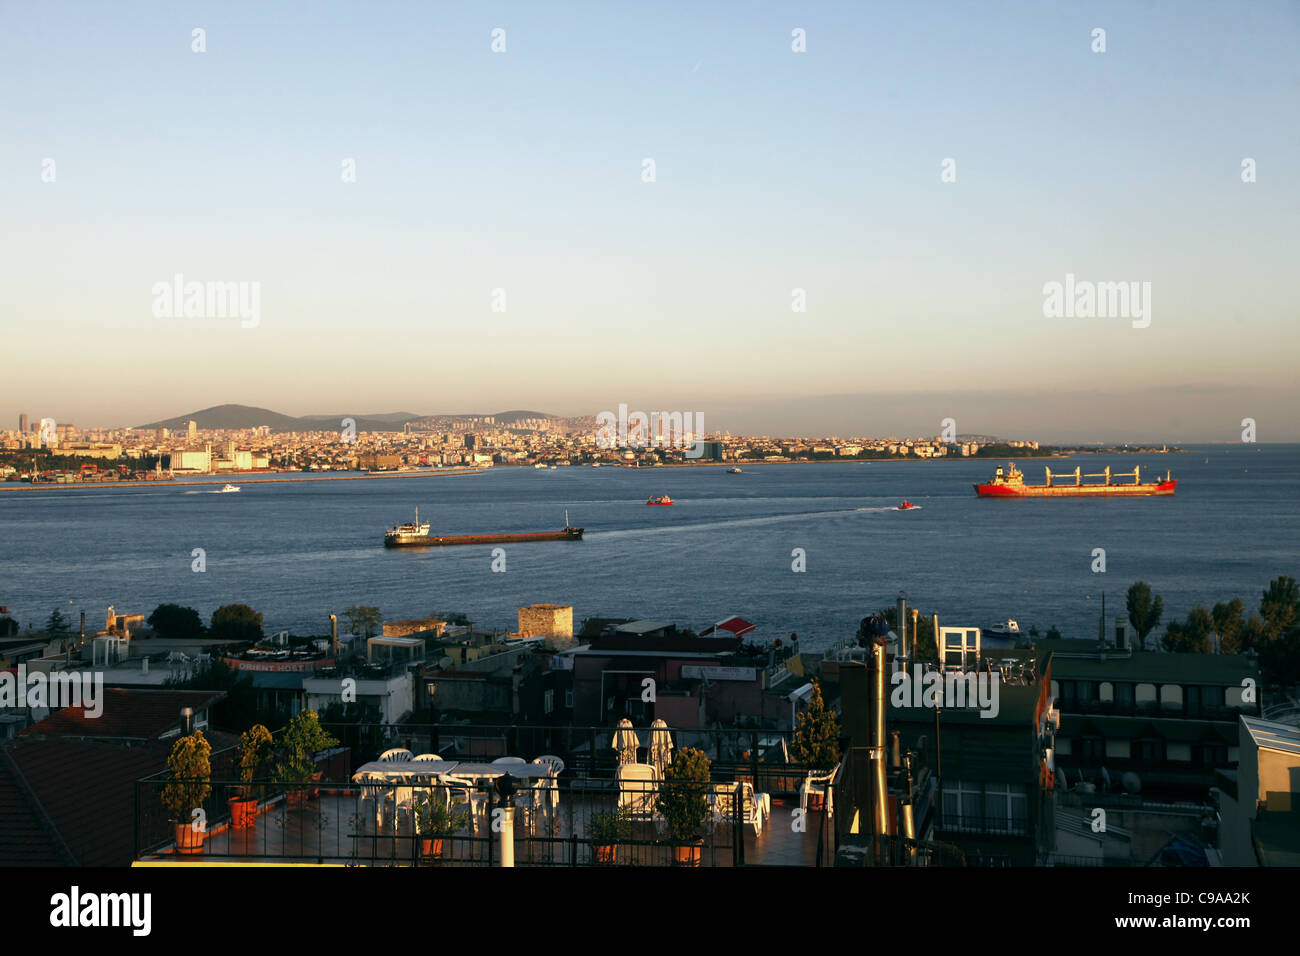 RED OIL TANKERS ON BOSPHORUS TAKSIM ISTANBUL TURKEY 03 October 2011 Stock Photo